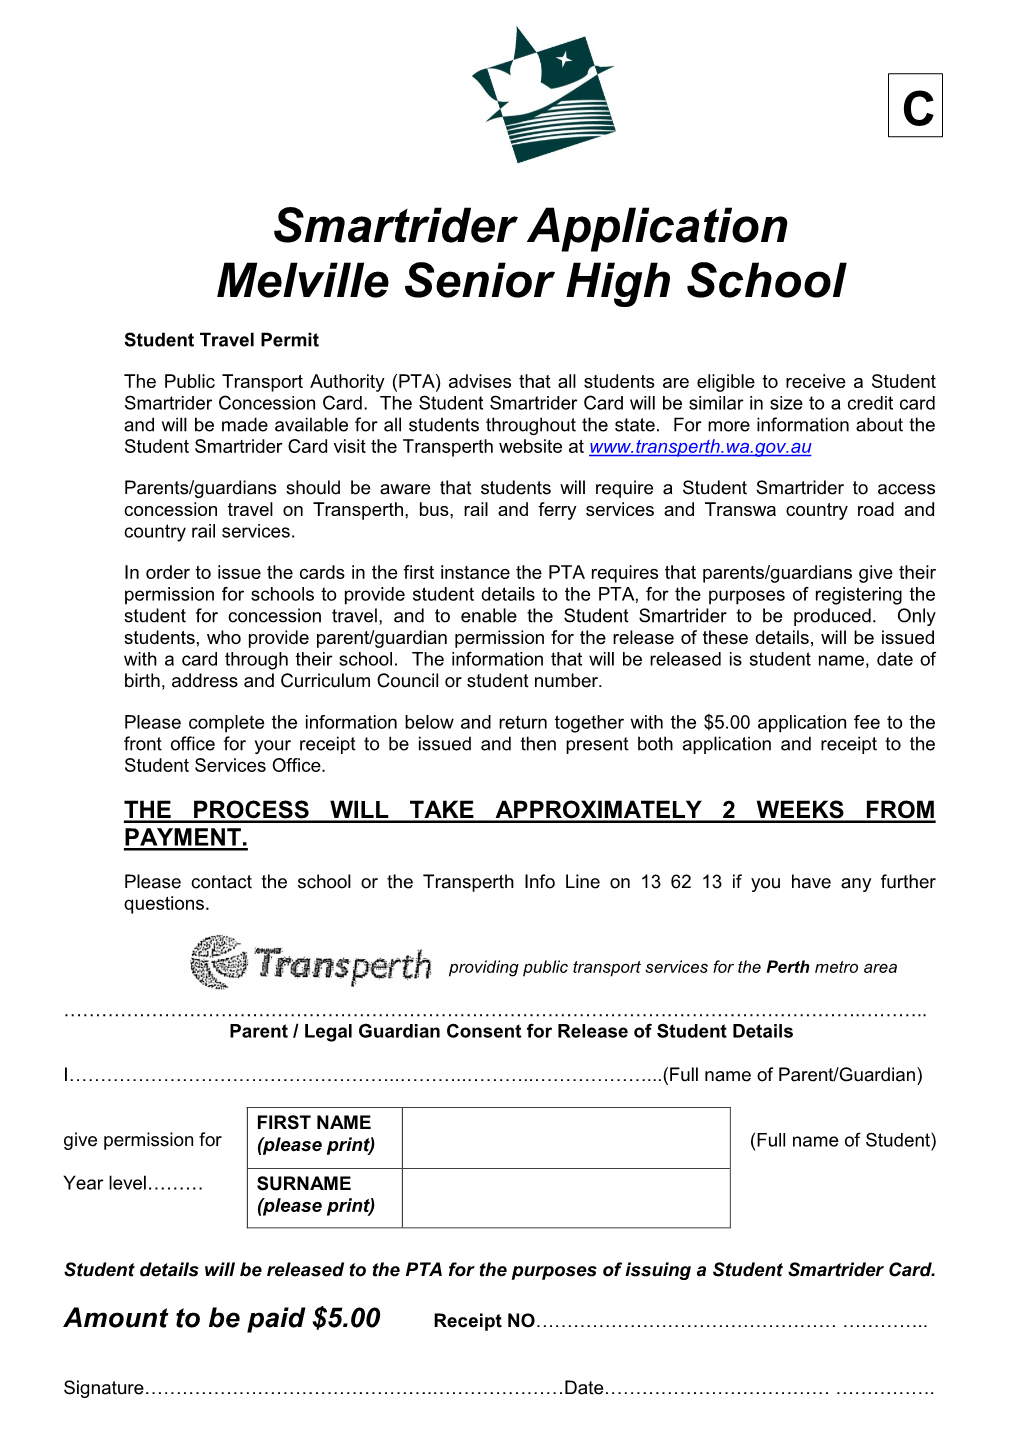 Smartrider Application Melville Senior High School C